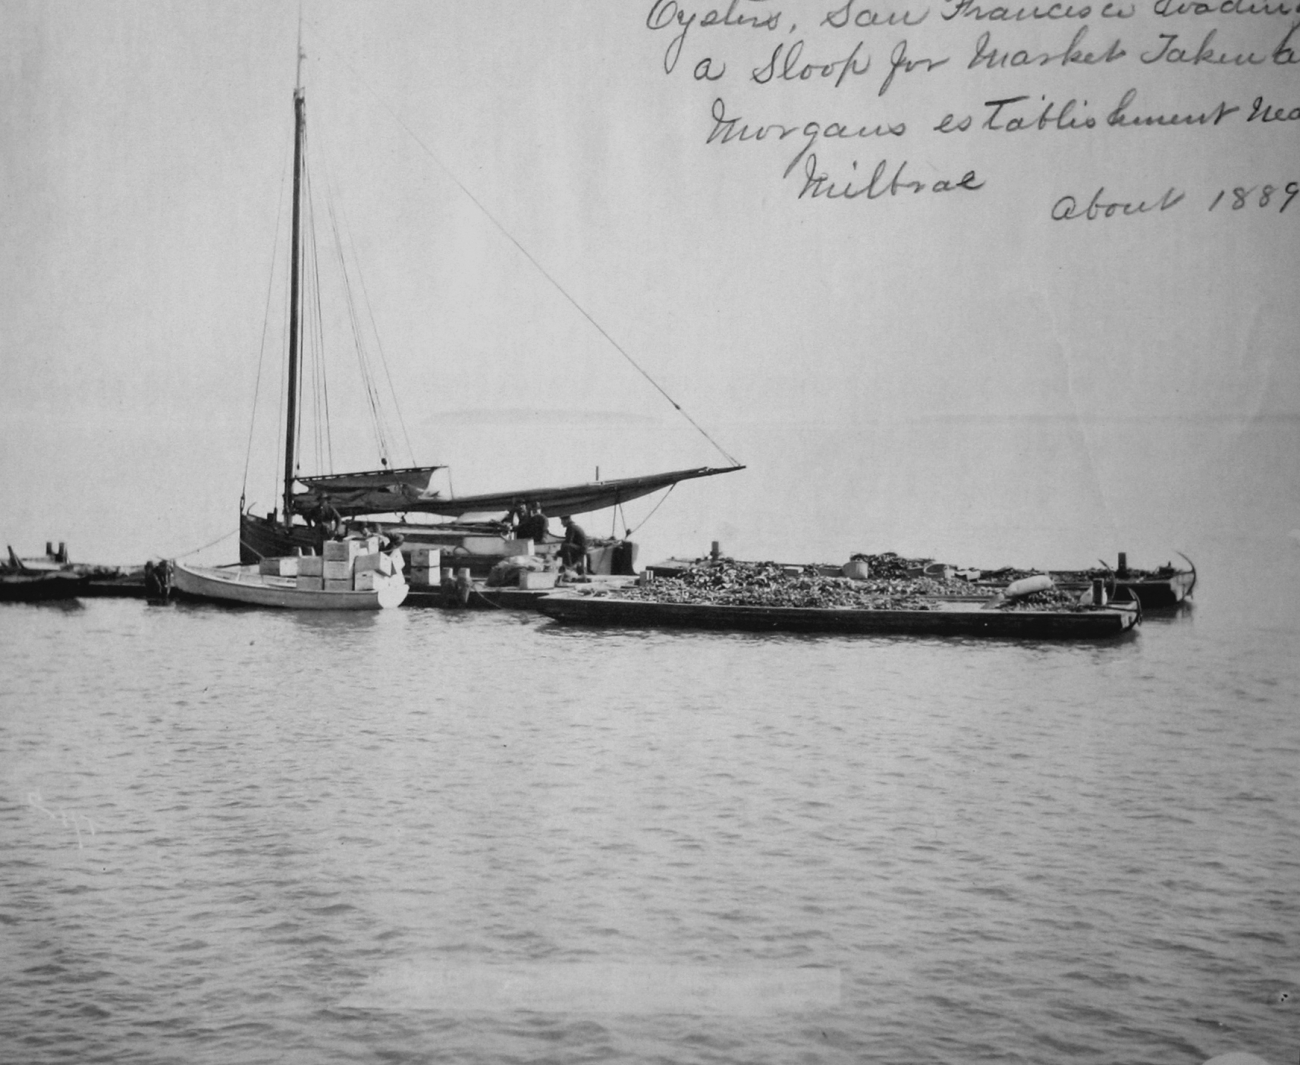 Oysters, San Francisco, CA, loading a sloop for market taken toMorgans establishment near Milbrae, about 1889